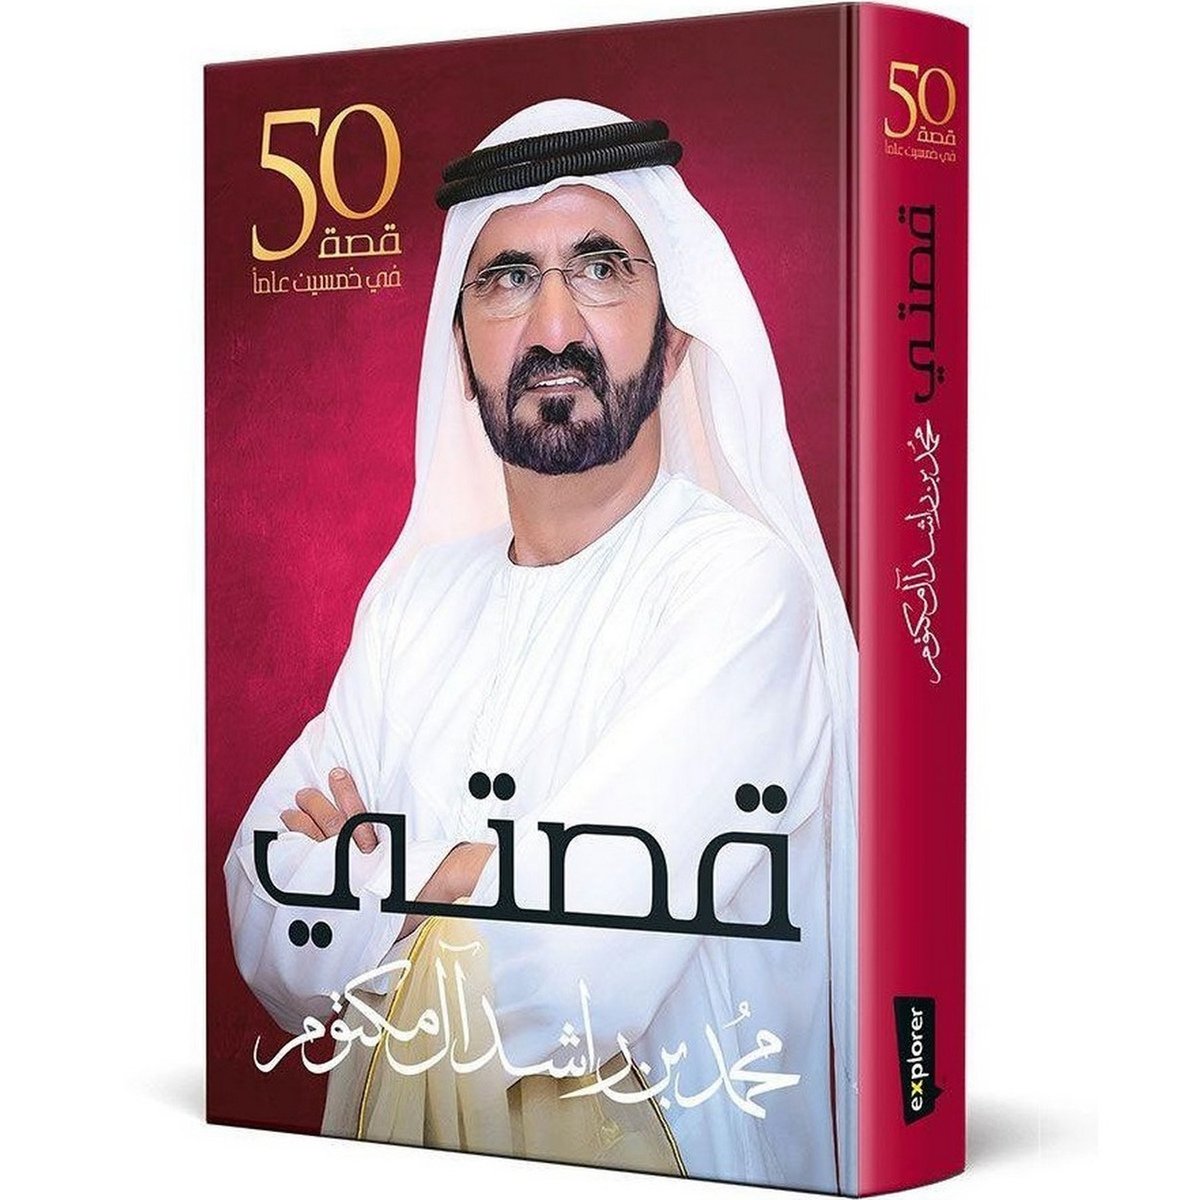 My Story - His Highness Sheikh Mohammed bin Rashid Al Maktoum (Arabic)